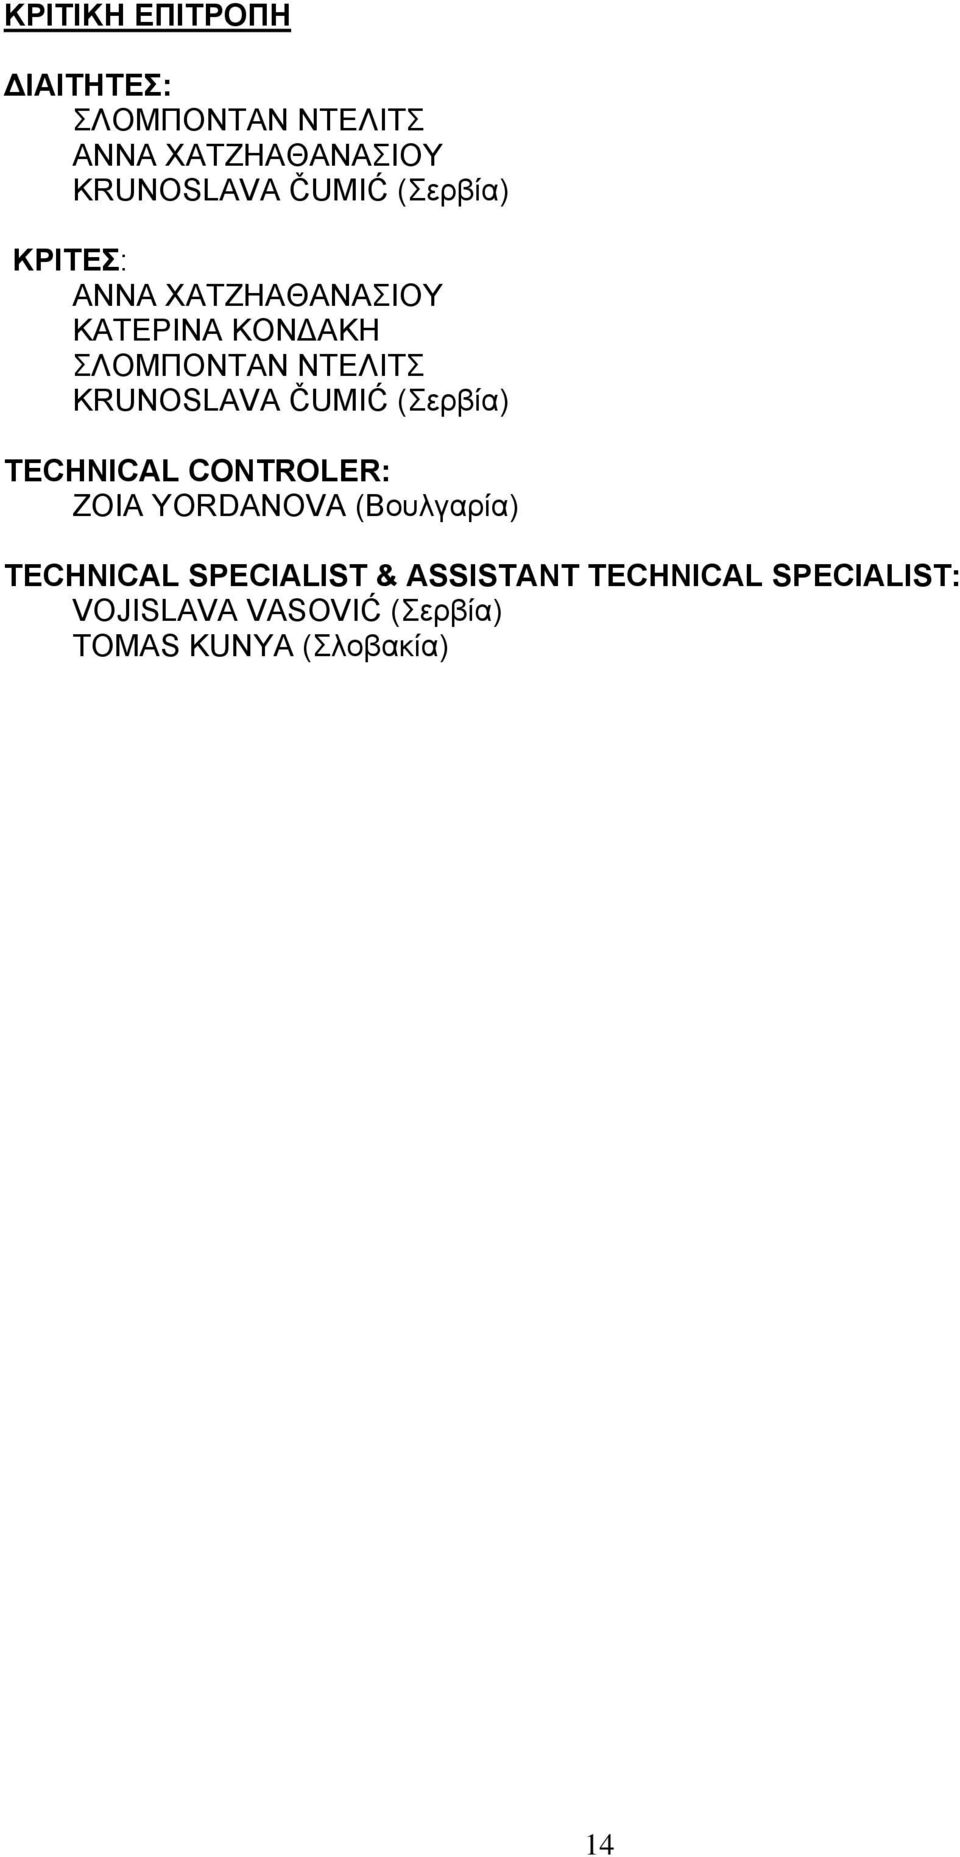 ČUMIĆ (Σερβία) TECHNICAL CONTROLER: ZOIA YORDANOVA (Βουλγαρία) TECHNICAL SPECIALIST